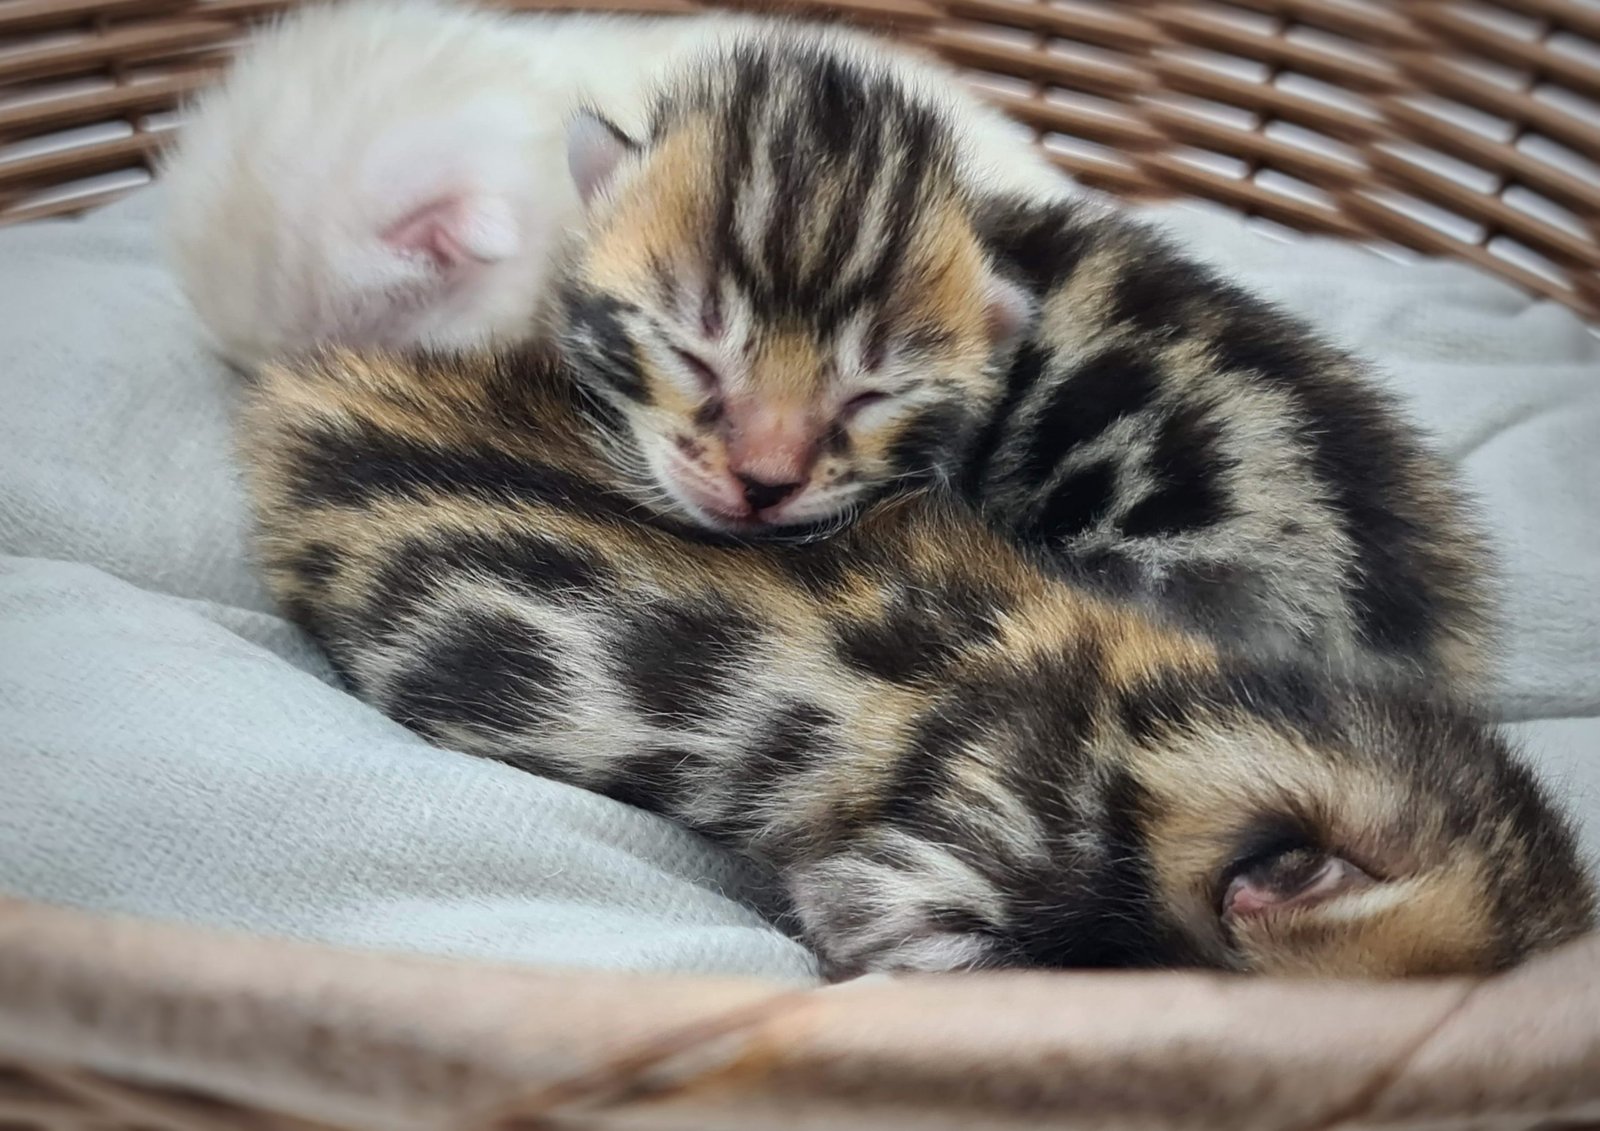 Bengal kittens available  Bengal kittens available now